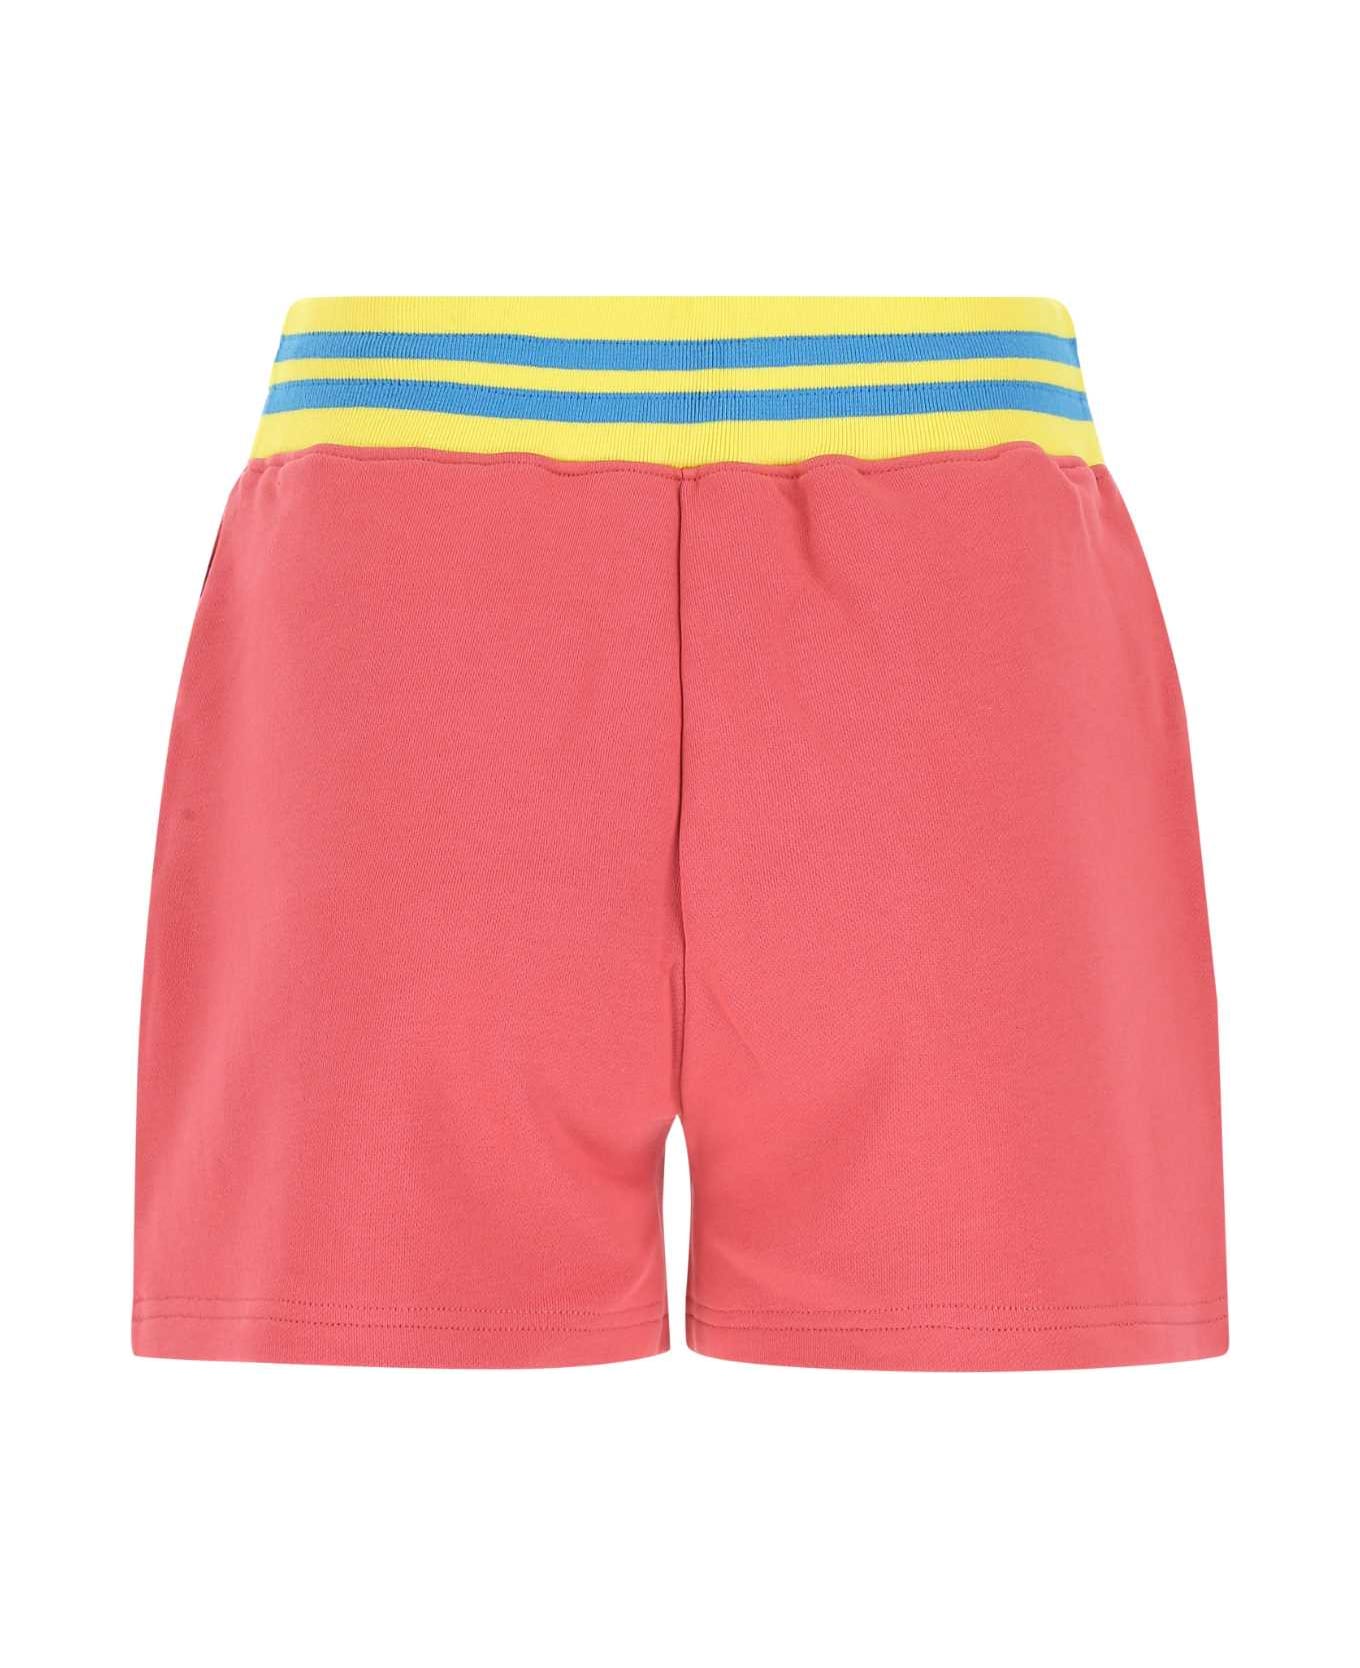 Moschino Pink Cotton Shorts - 1206 ショートパンツ